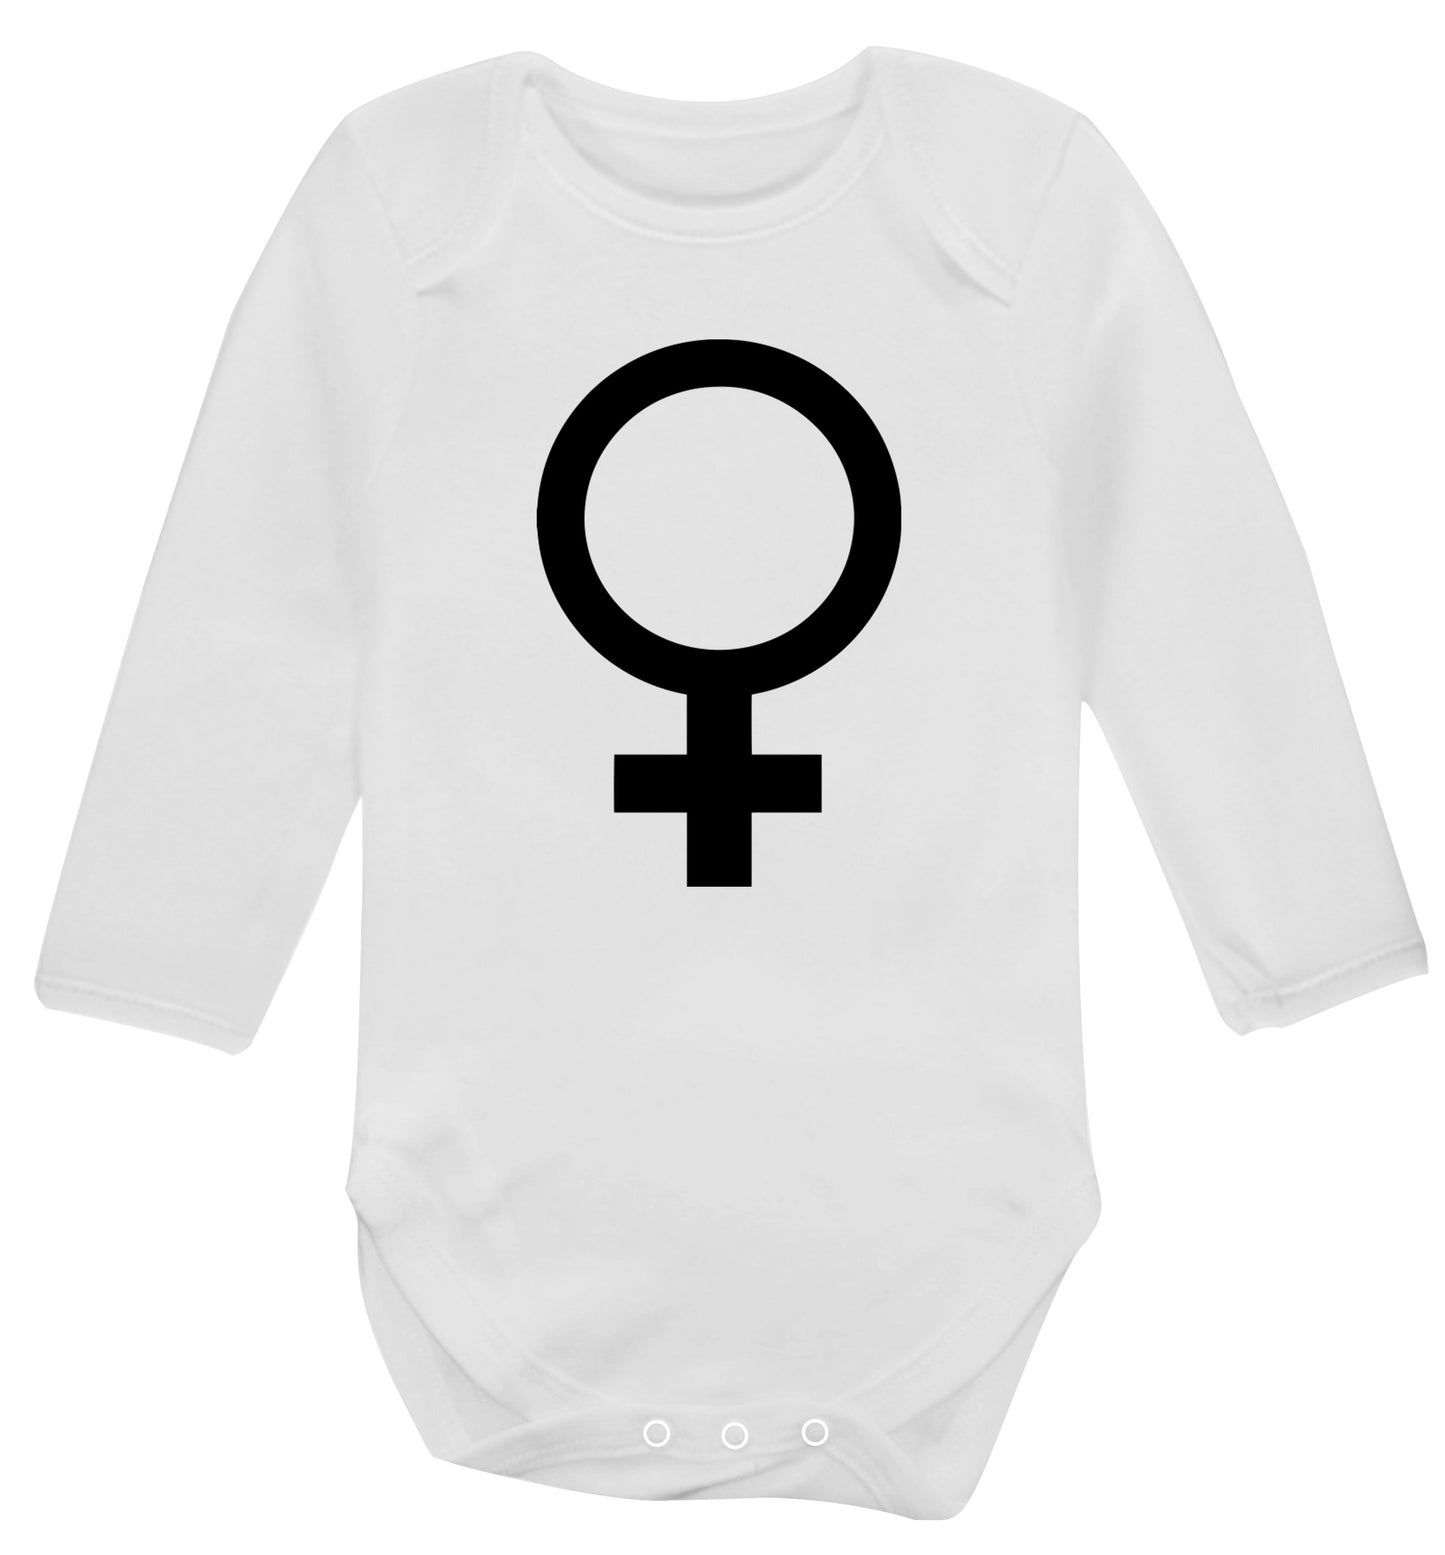 Female symbol large Baby Vest long sleeved white 6-12 months